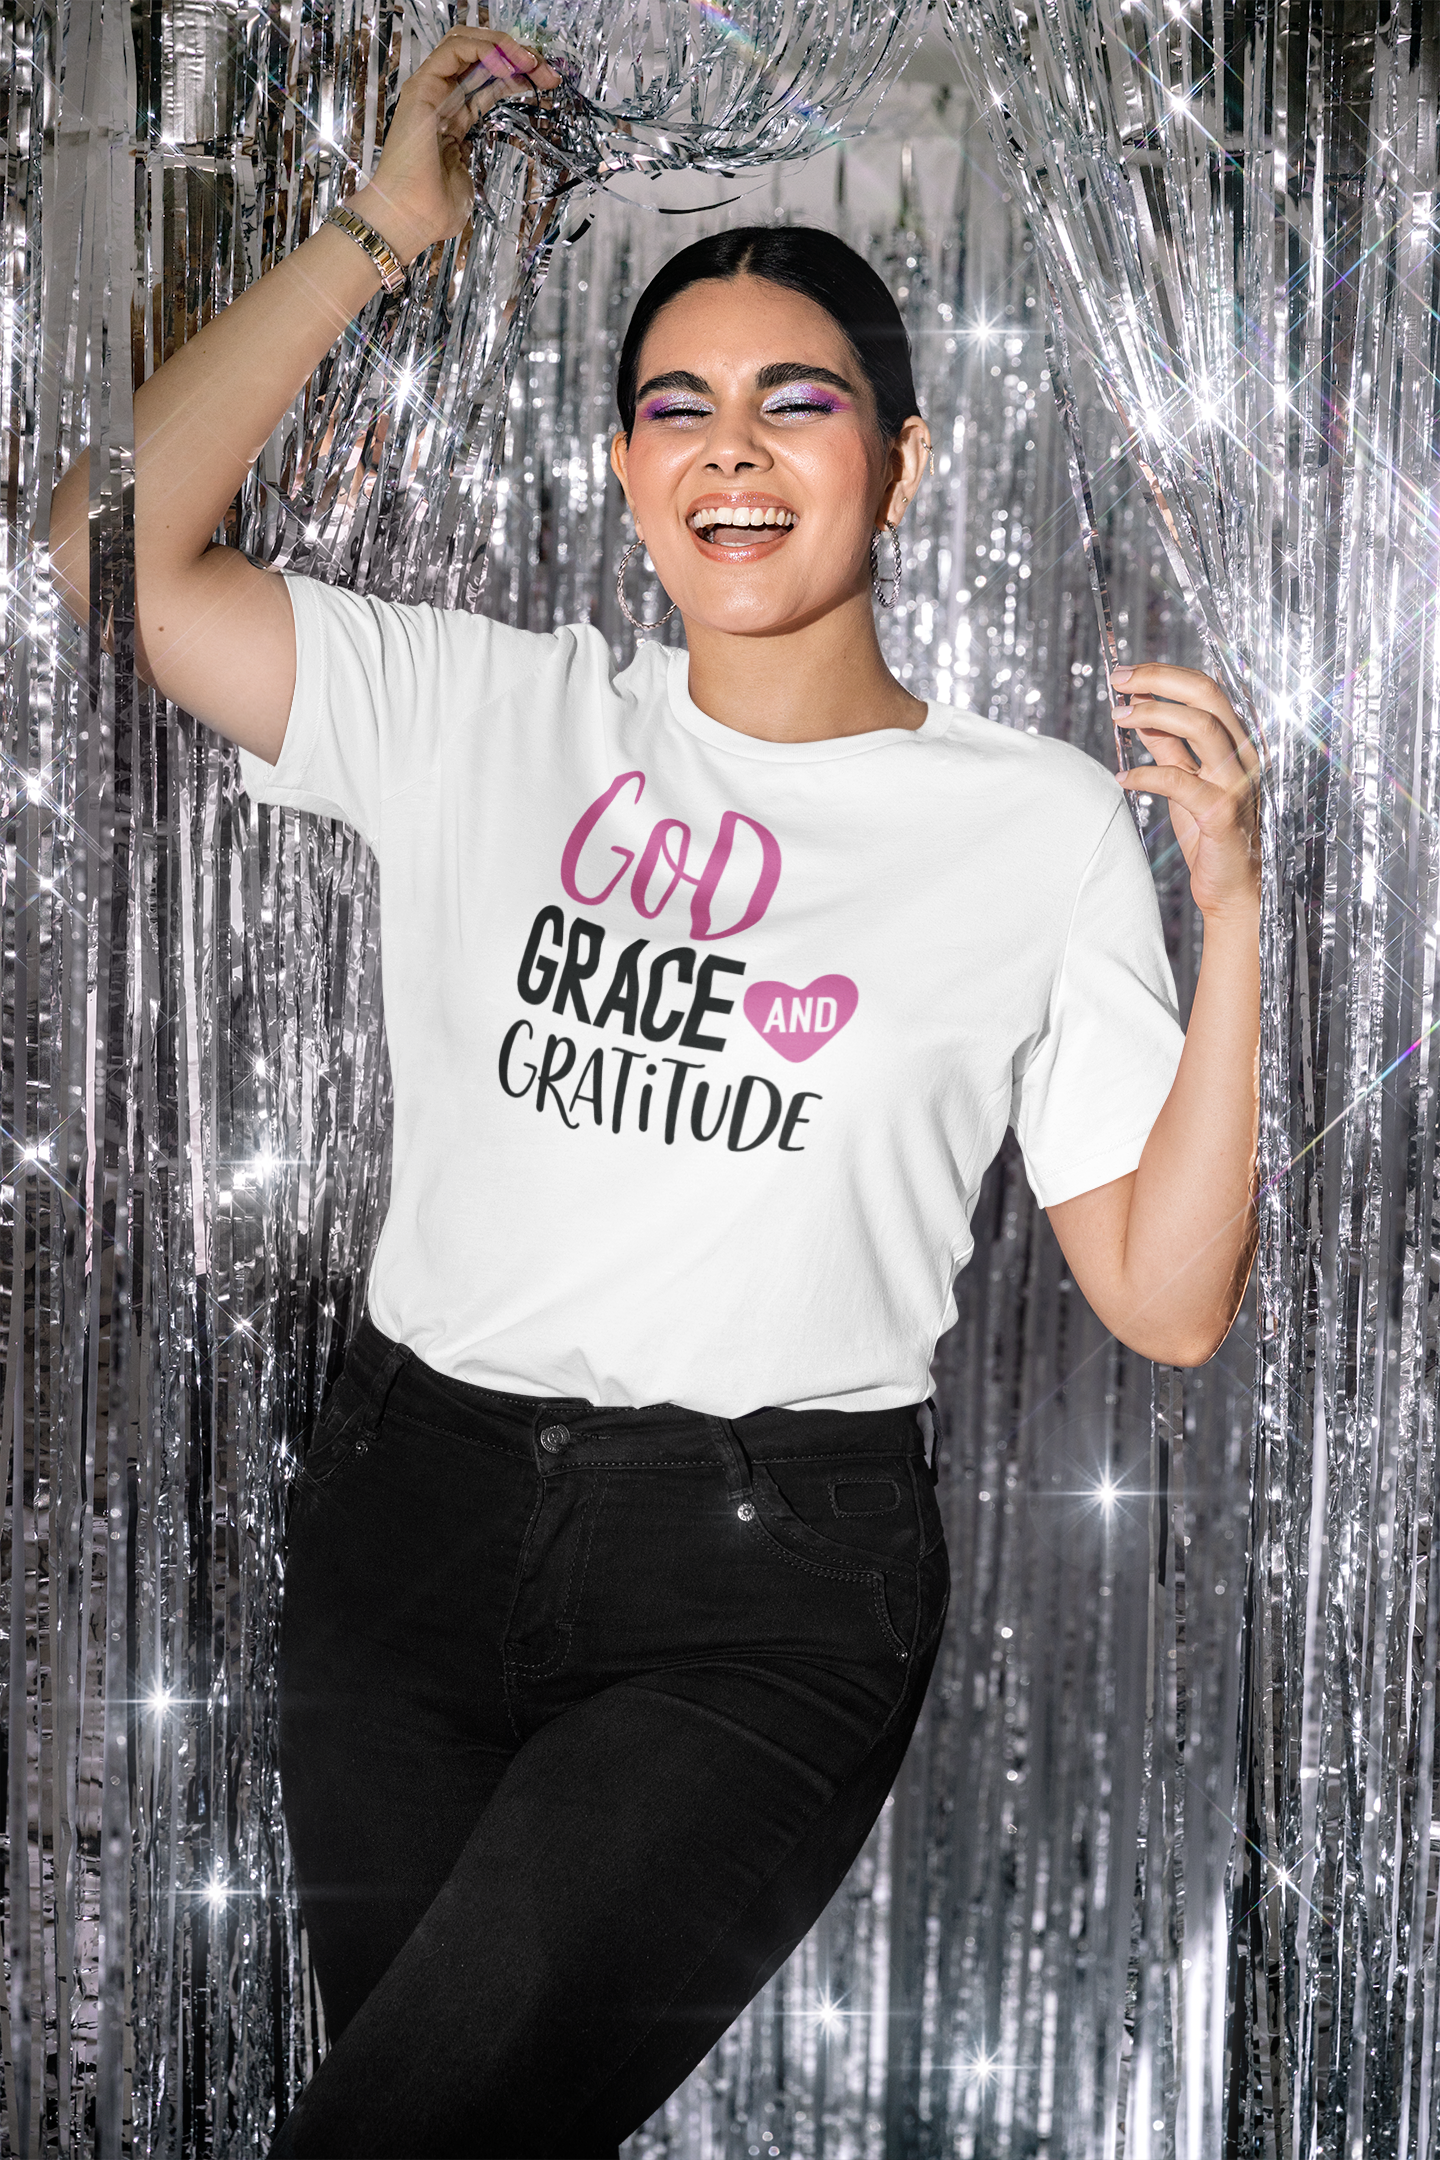 "God, Grace and Gratitude" Women's Christian Crewneck T-shirt